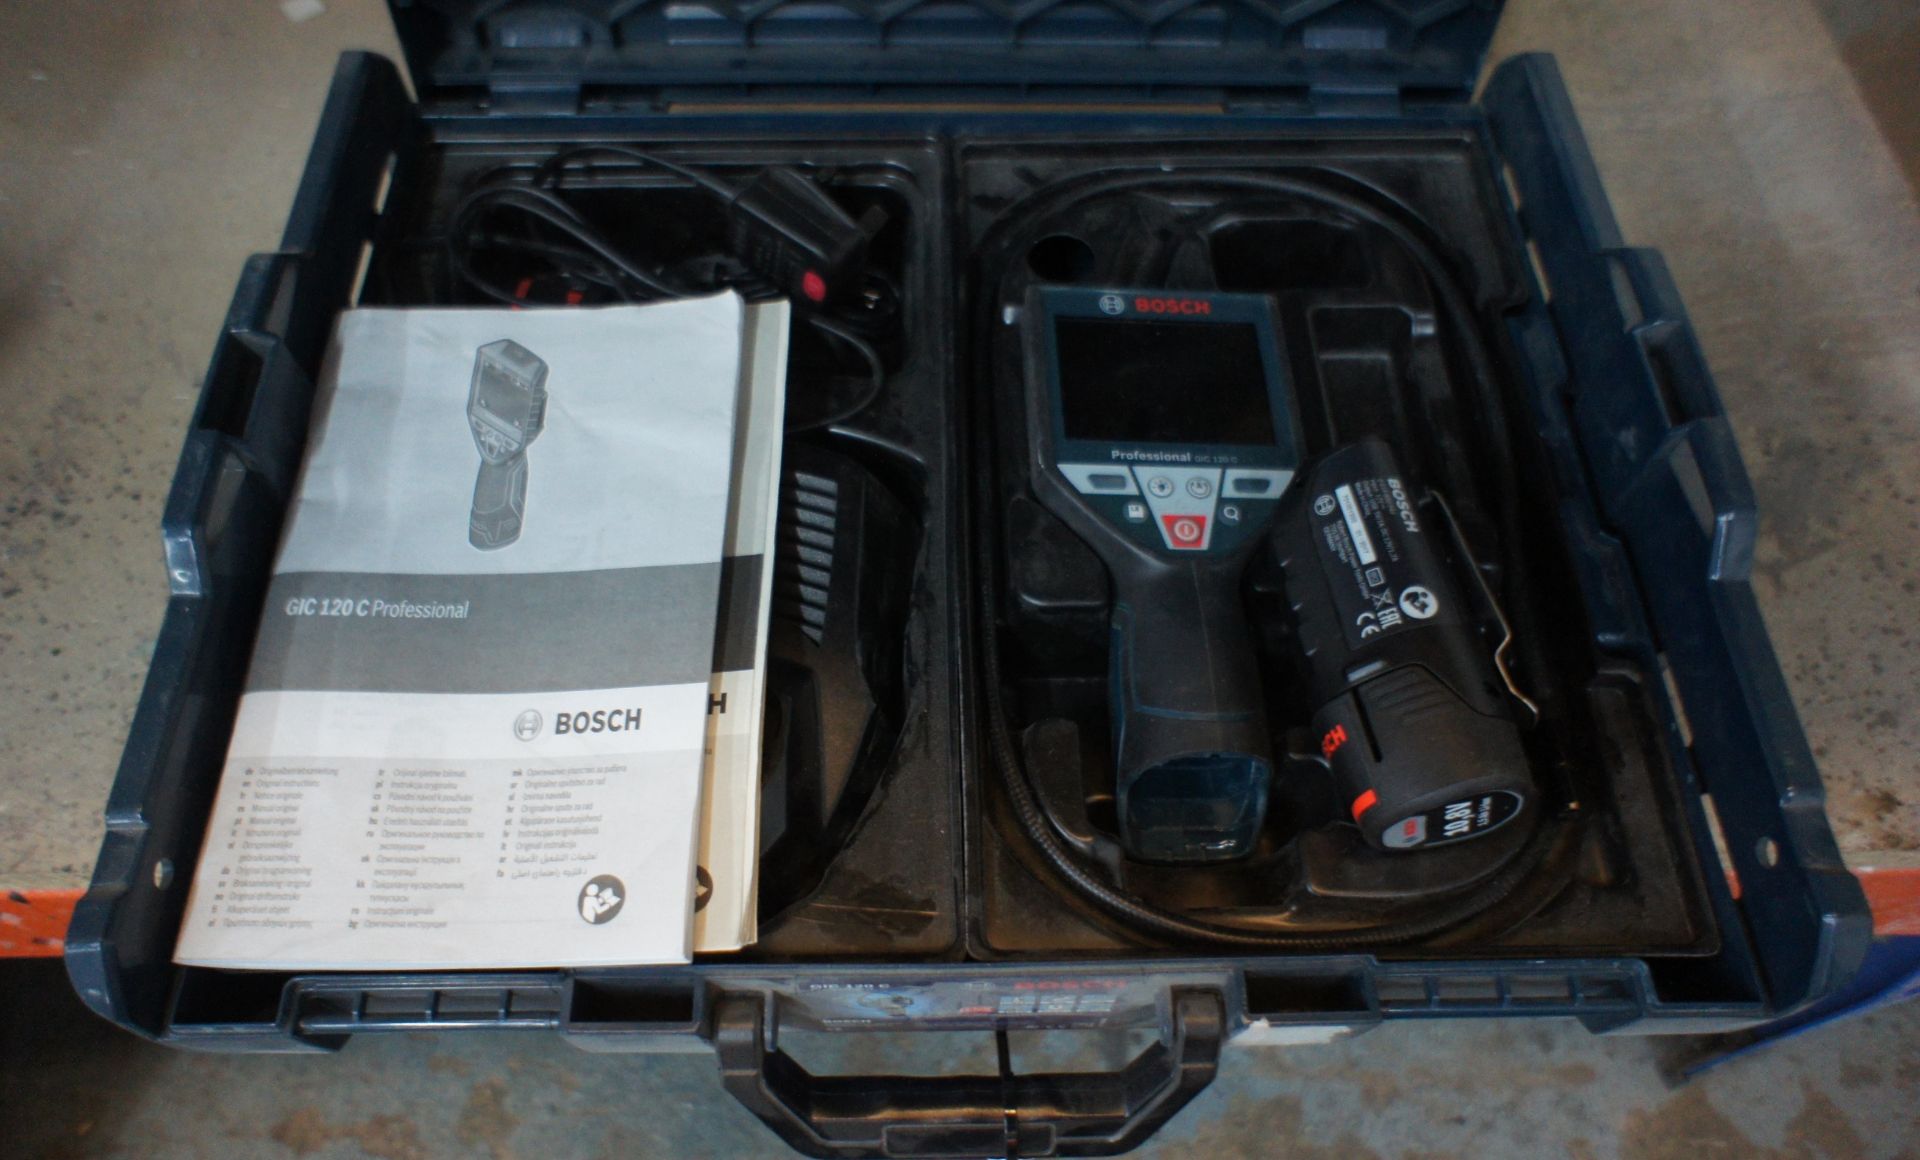 Bosch GIC 120C Professional inspection camera